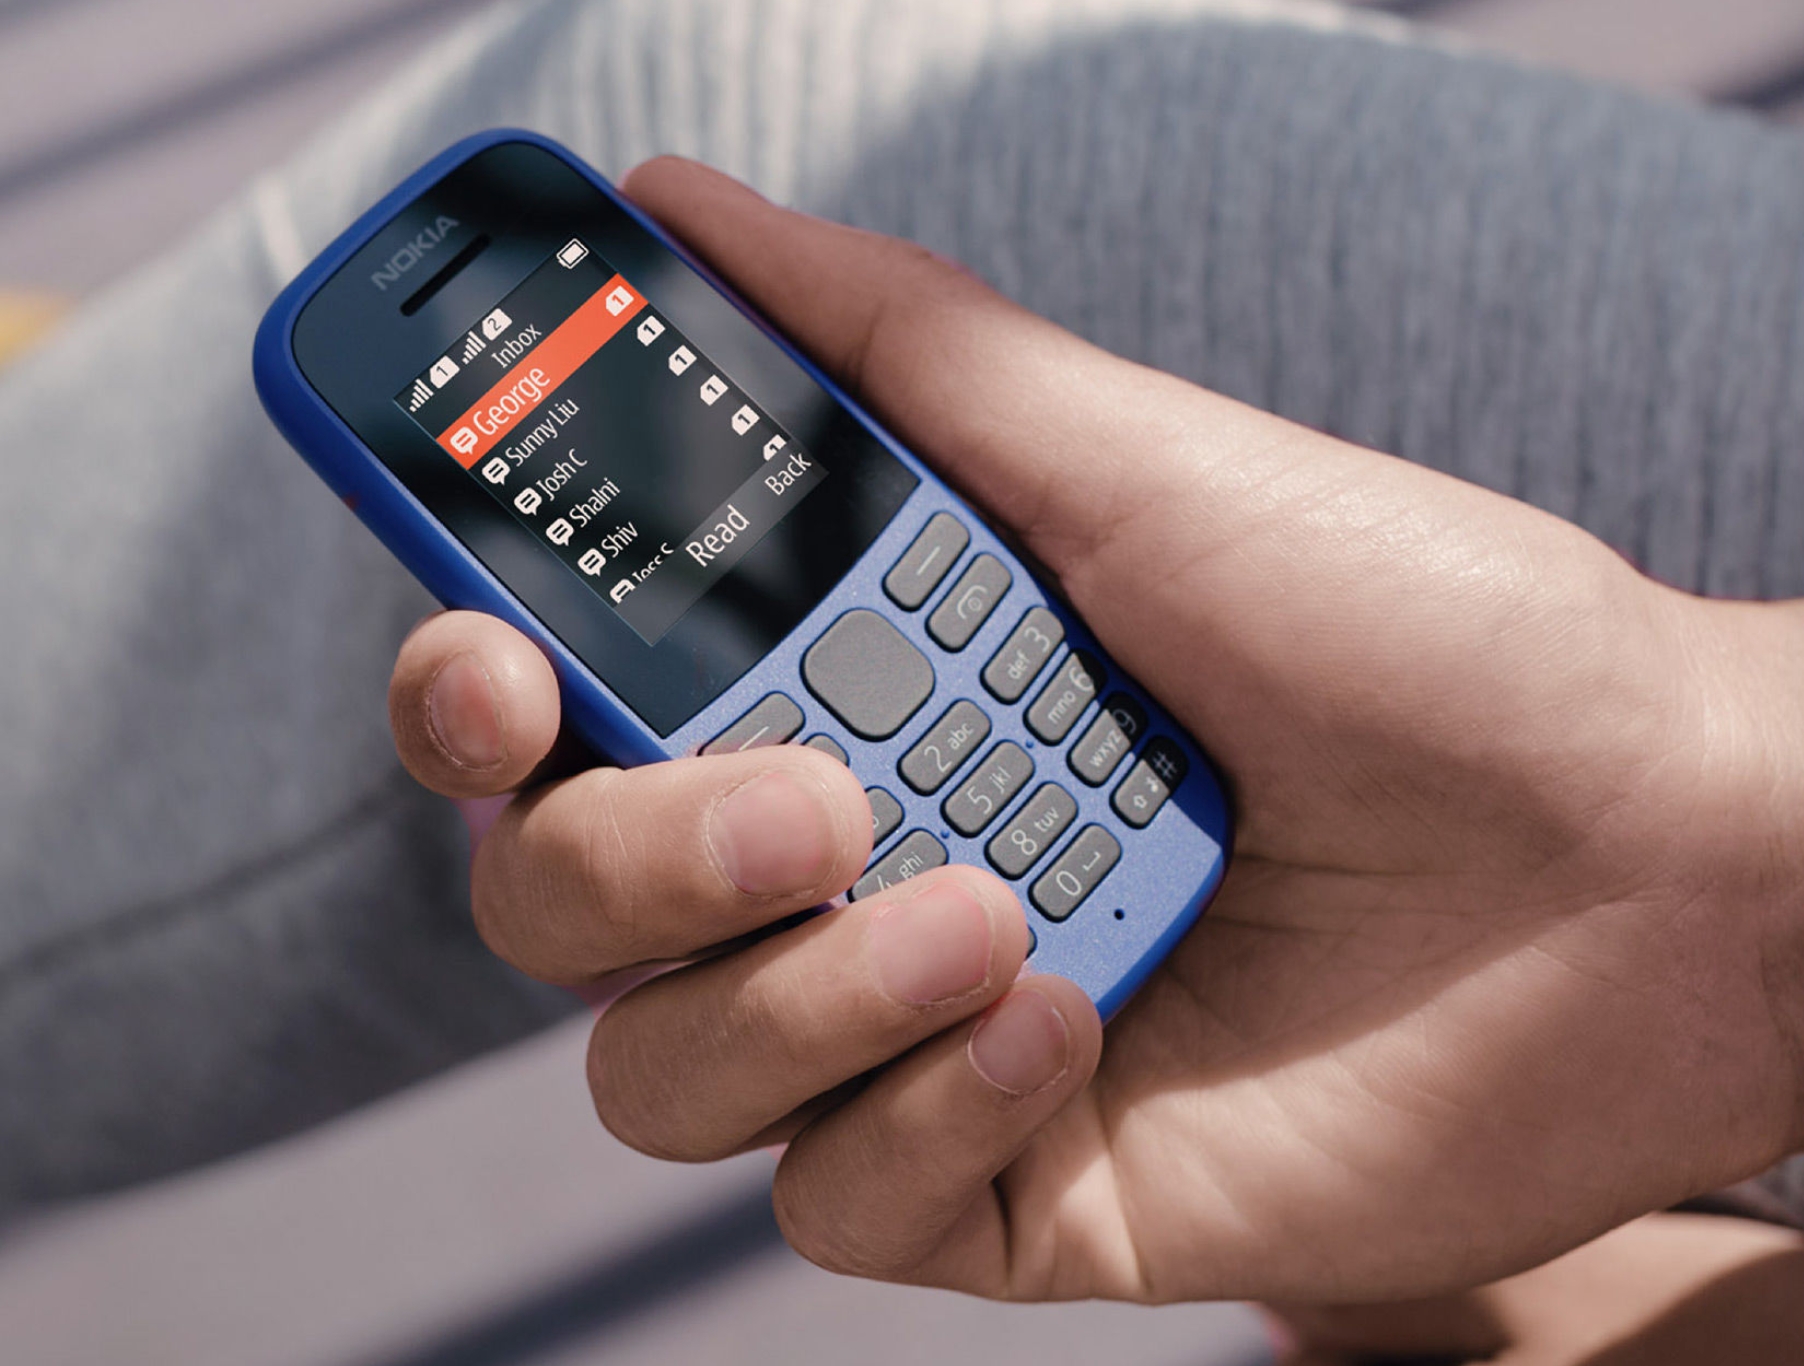 Nokia 105 2019.jpg